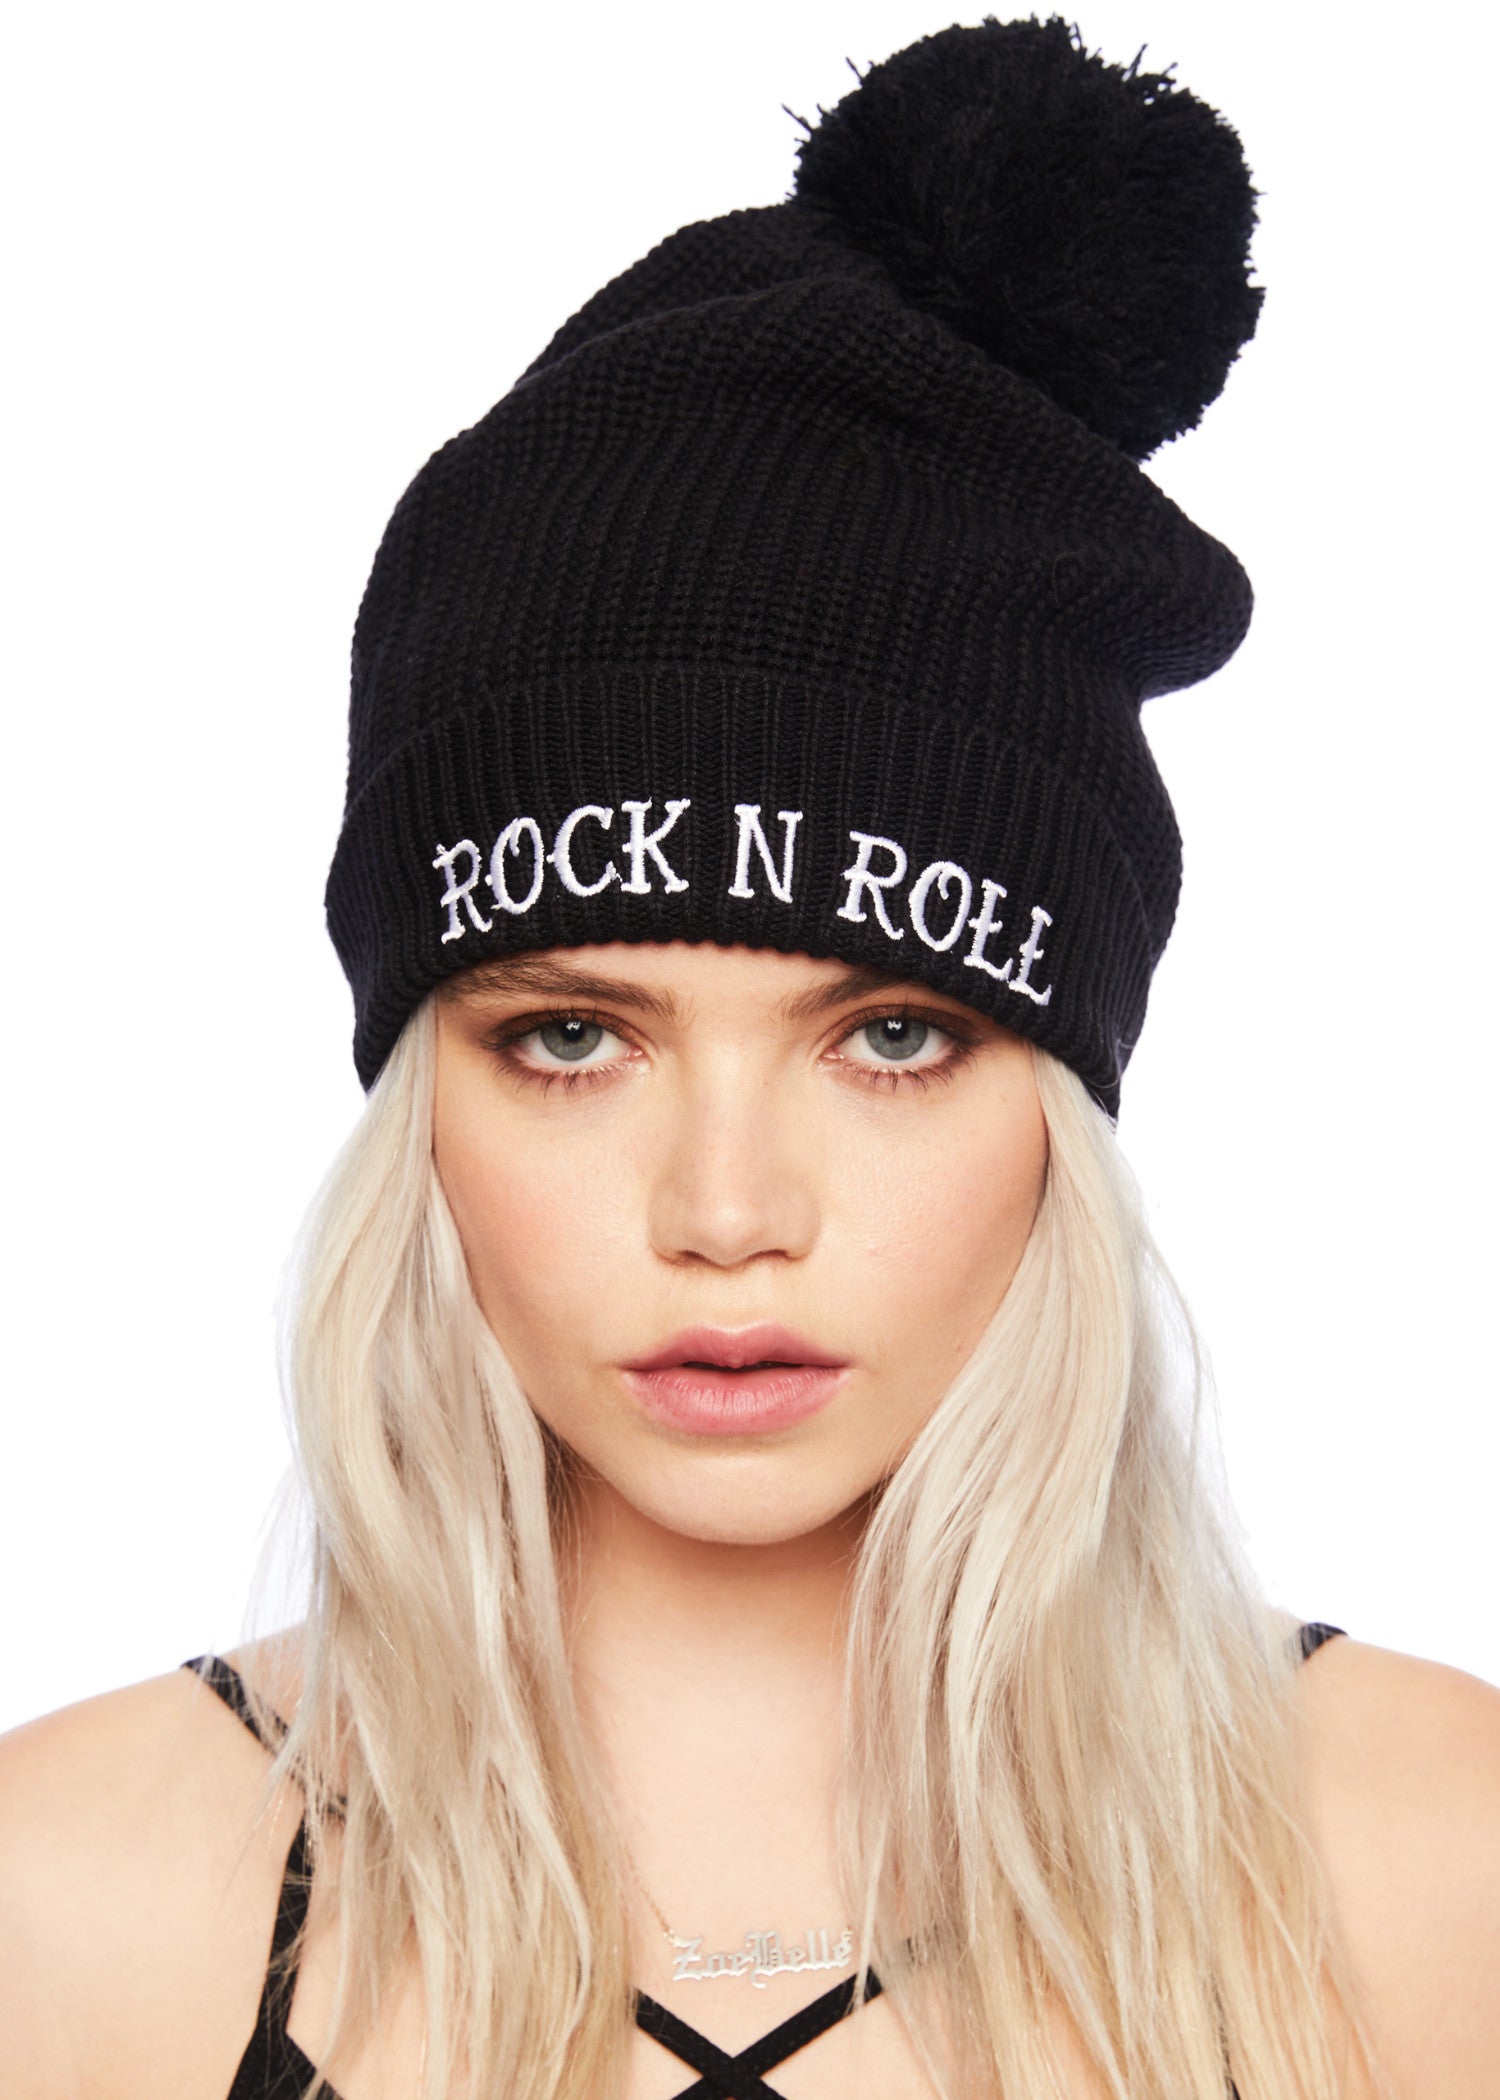 Rock 'n' Roll Knit Beanie with Pom Pom | Pretty Attitude | Pretty Attitude